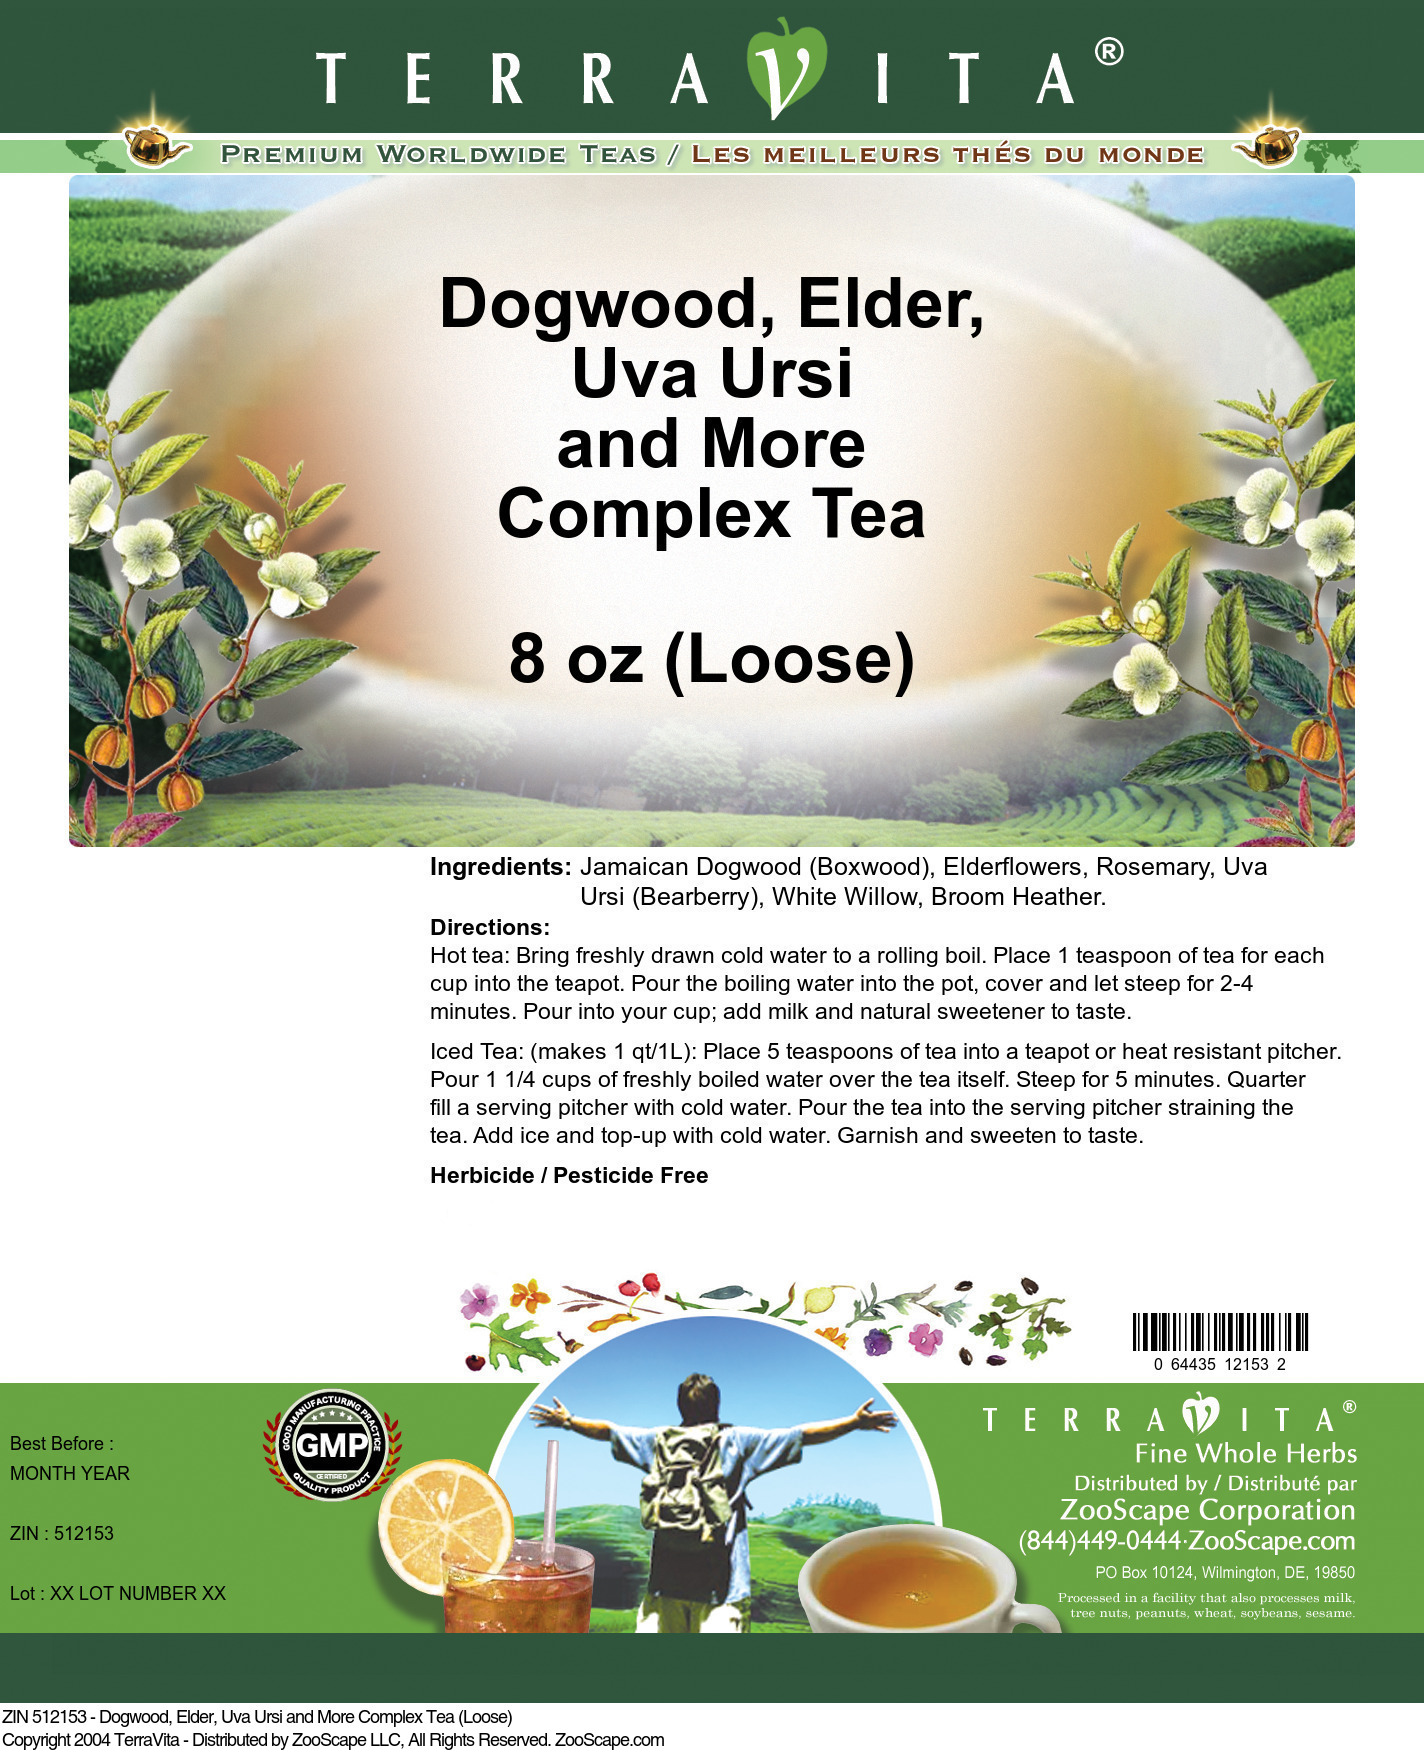 Dogwood, Elder, Uva Ursi and More Complex Tea (Loose) - Label